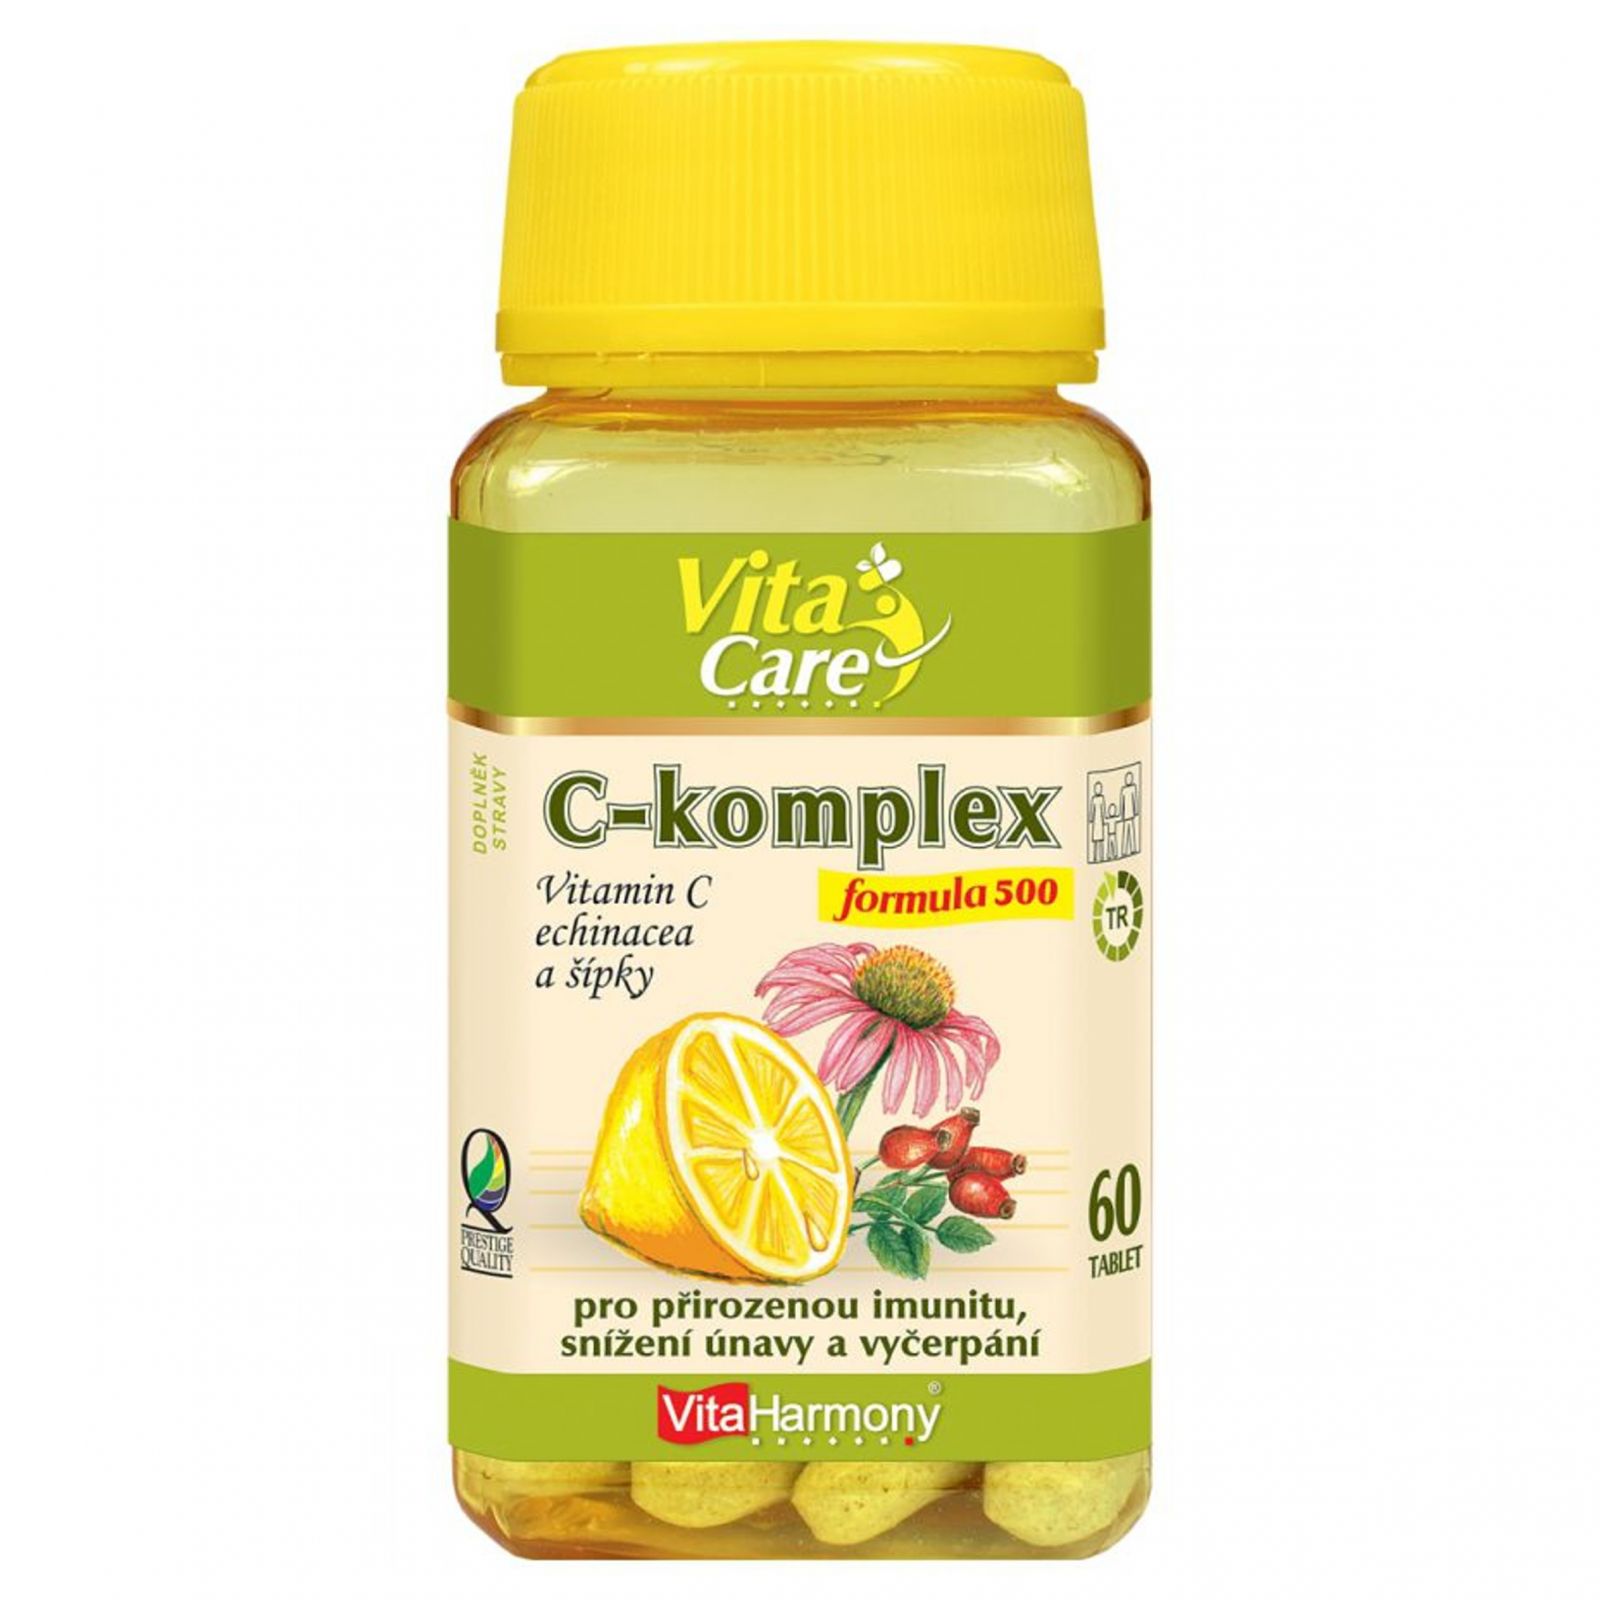 Vitamin mix. Микс витаминов. Витамин se. Витамин си. Витамин с 60 мг.